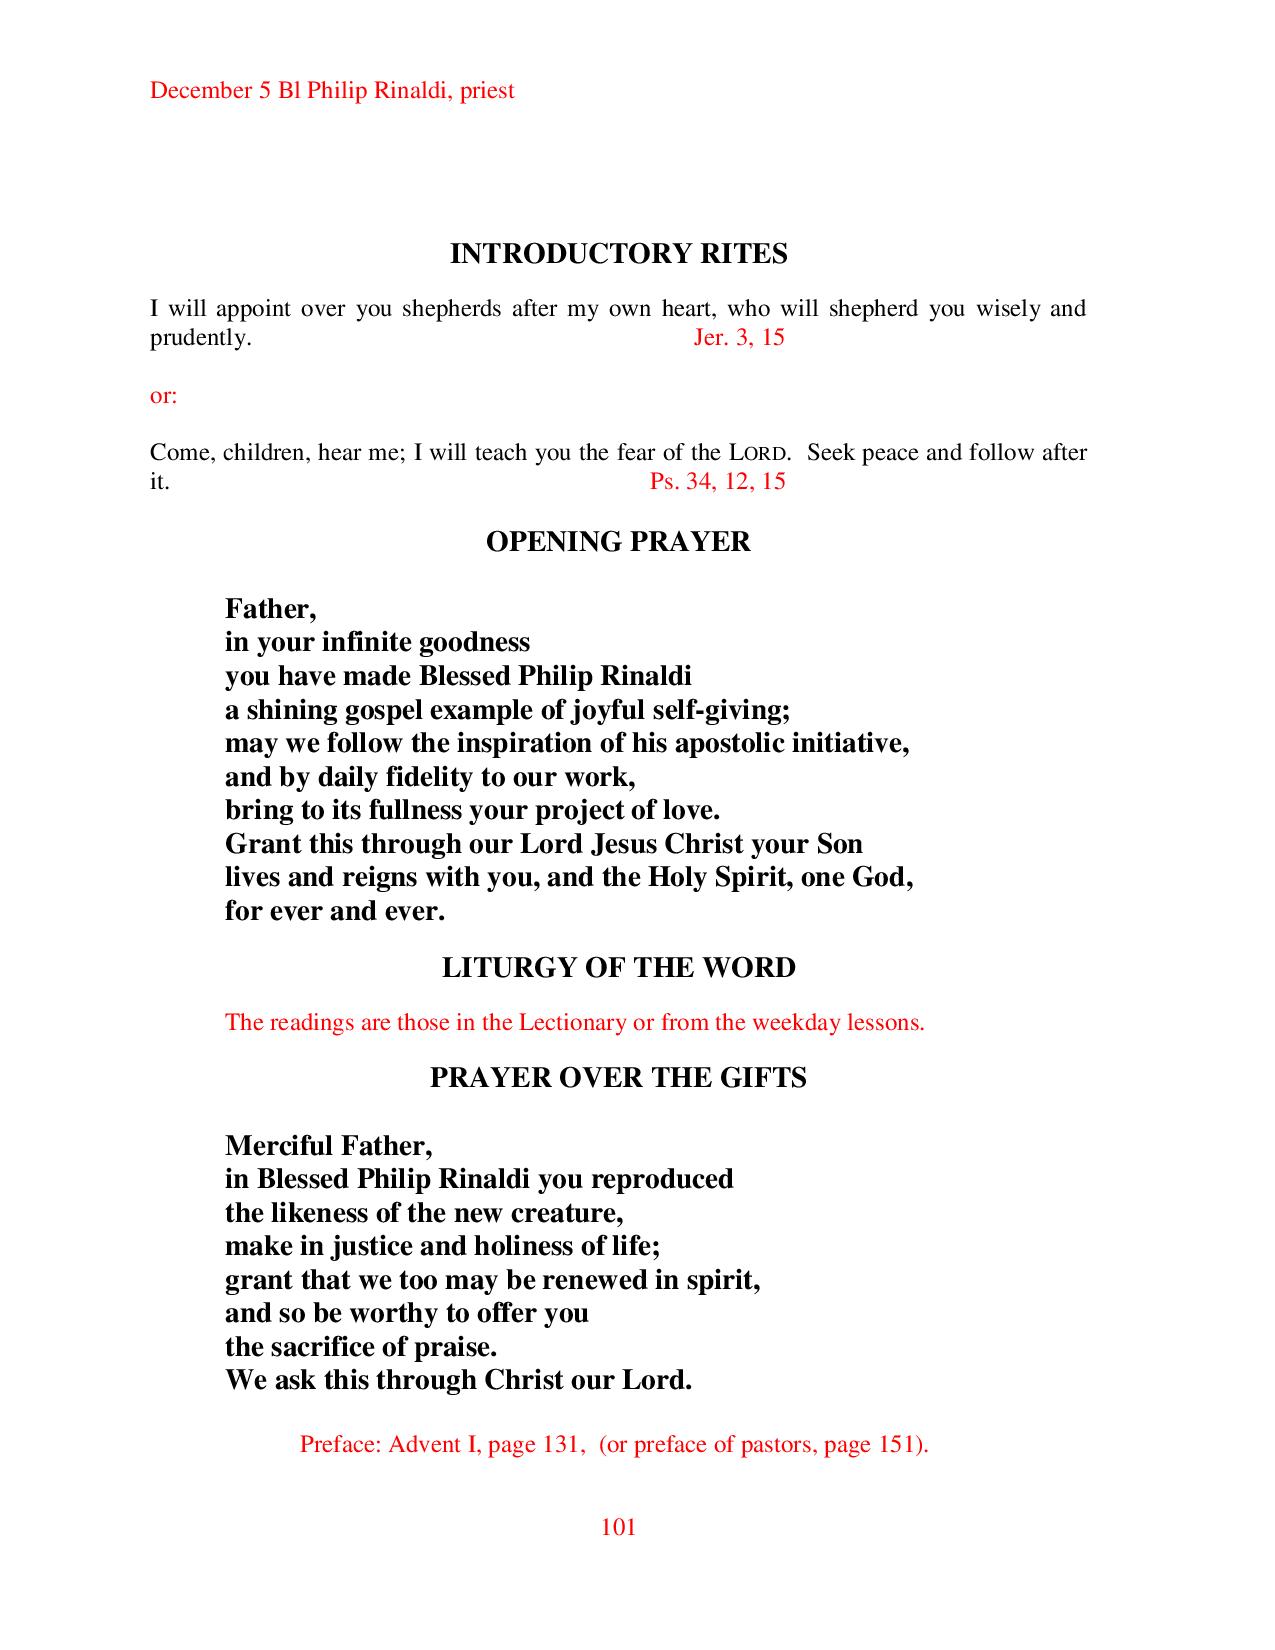 SalesianMissal-page-101.jpg